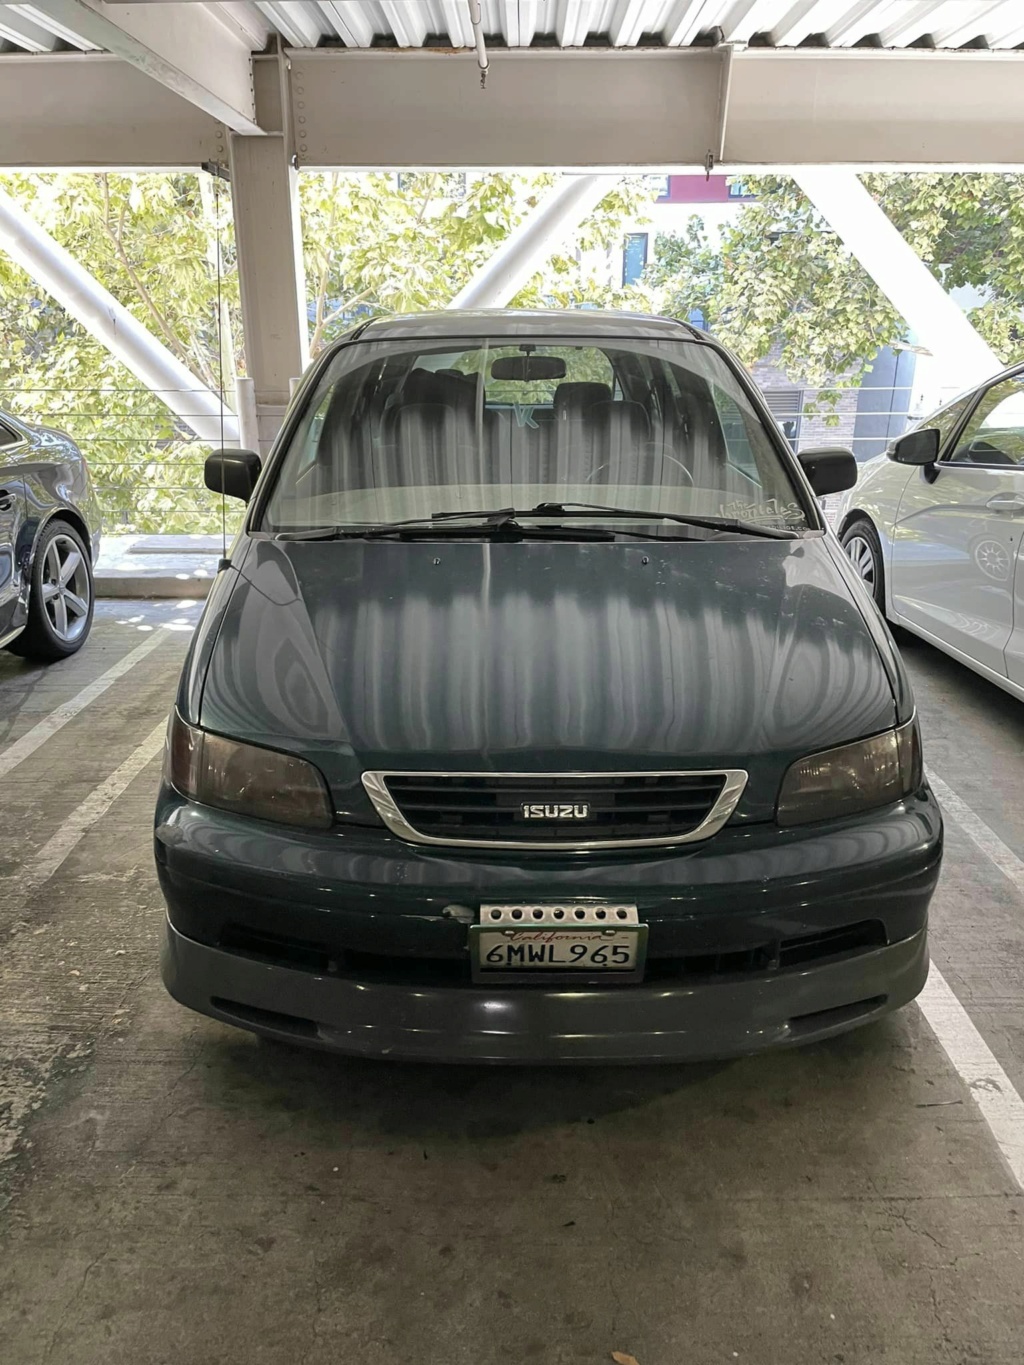 Isuzu Oasis - le Honda Odyssey rebadgé 38530510